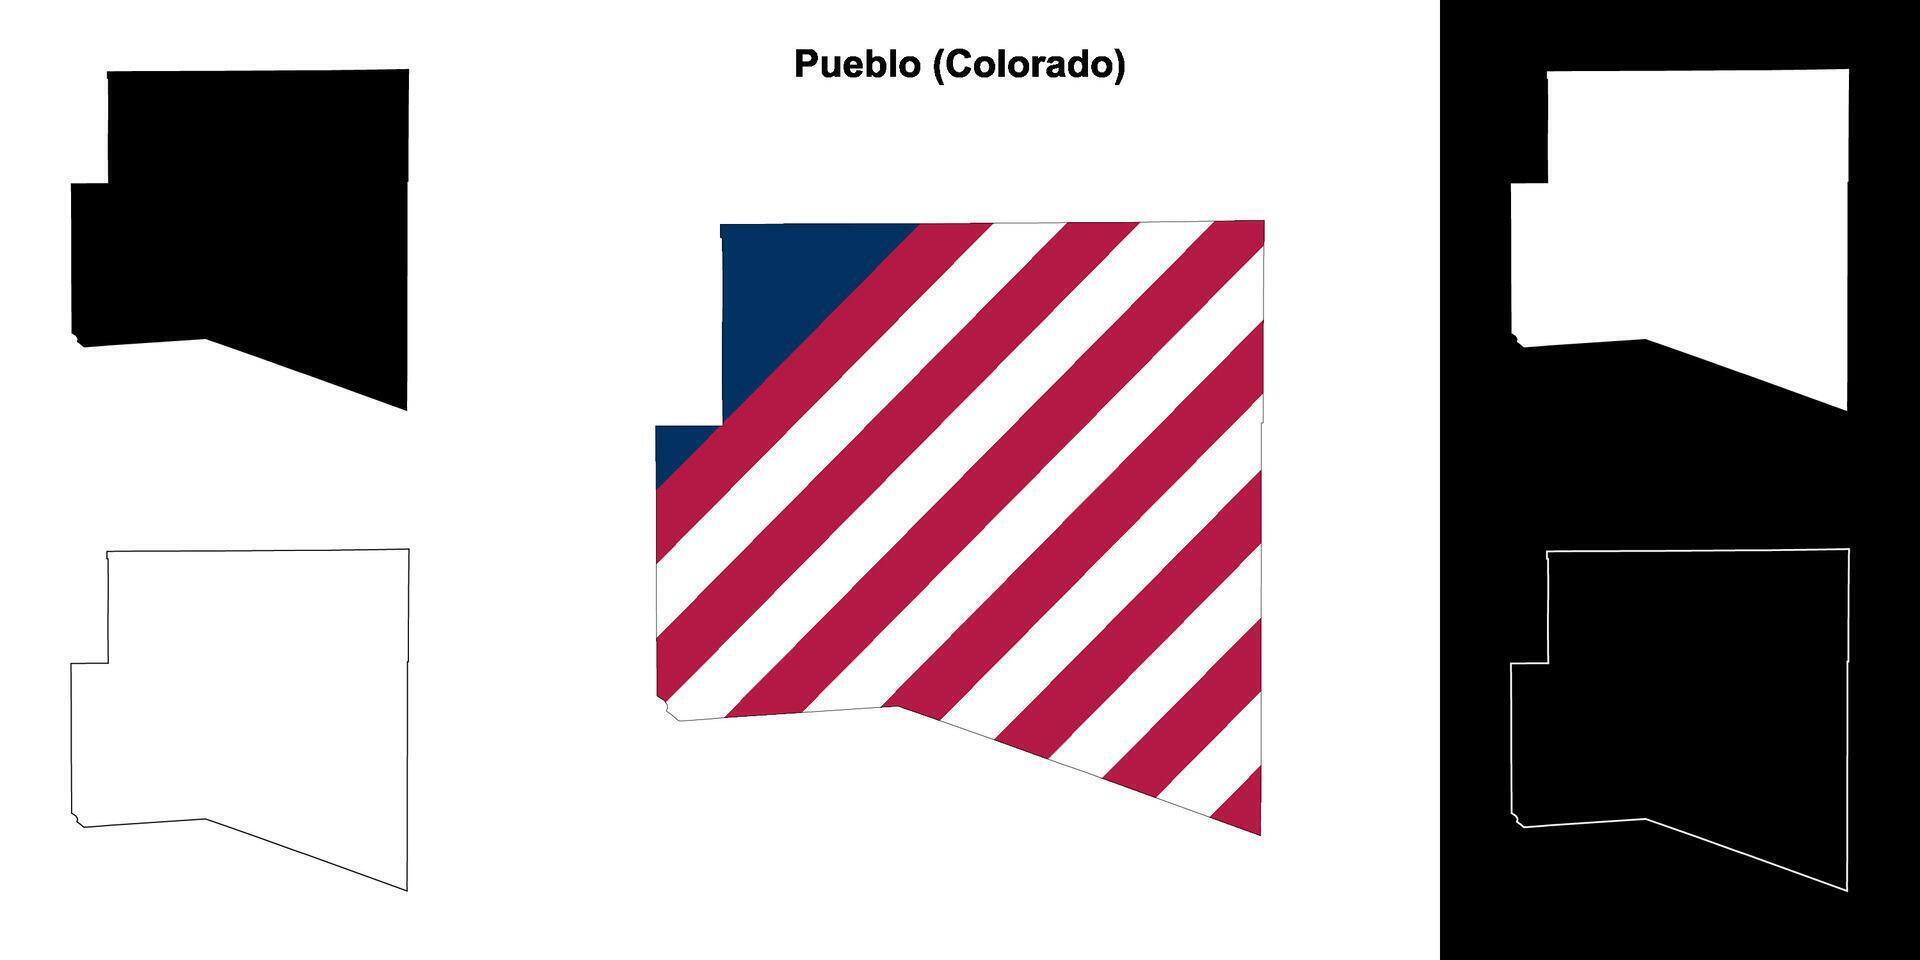 pueblo contea, Colorado schema carta geografica impostato vettore